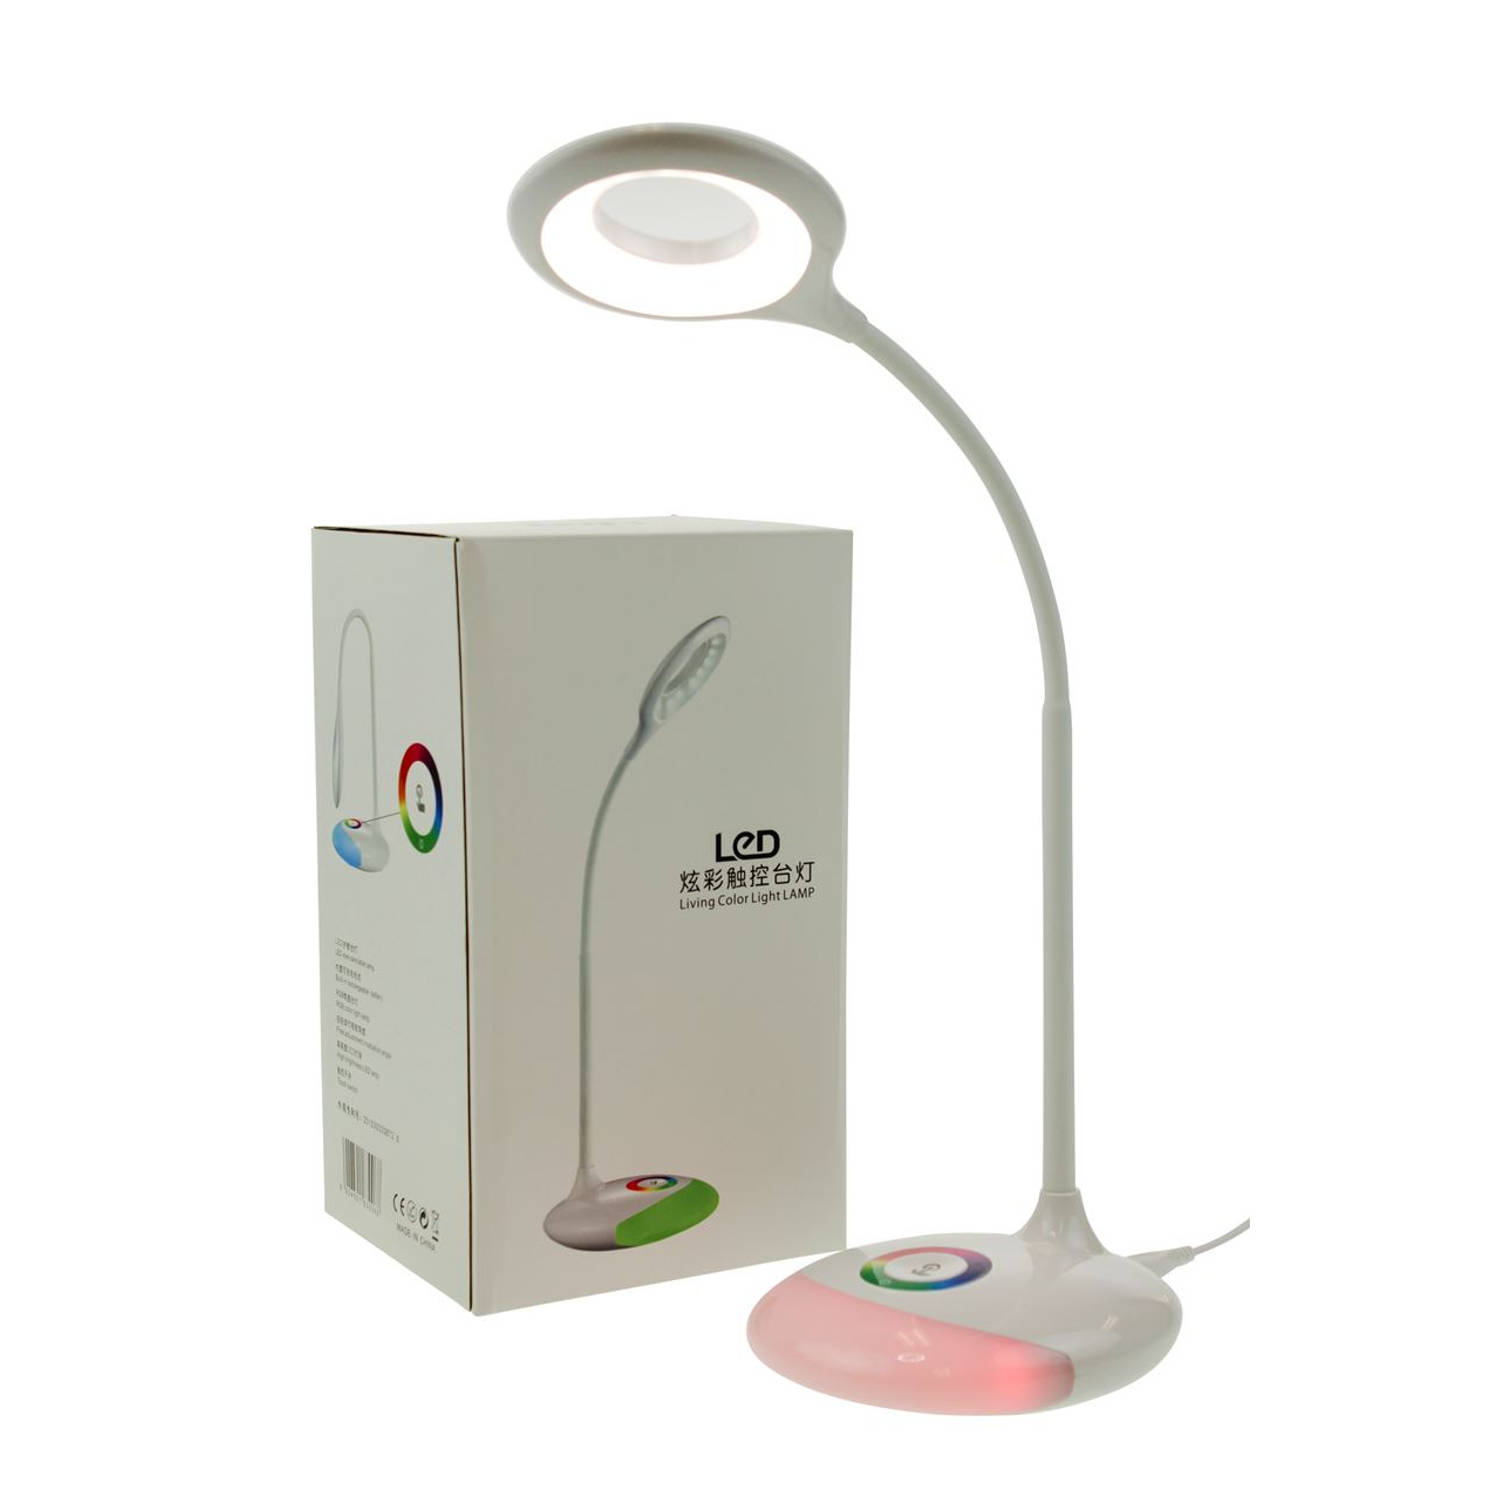 Gebakjes Ontslag Helemaal droog Moodlight flexibele led bureaulamp met rgb verlichting | Blokker